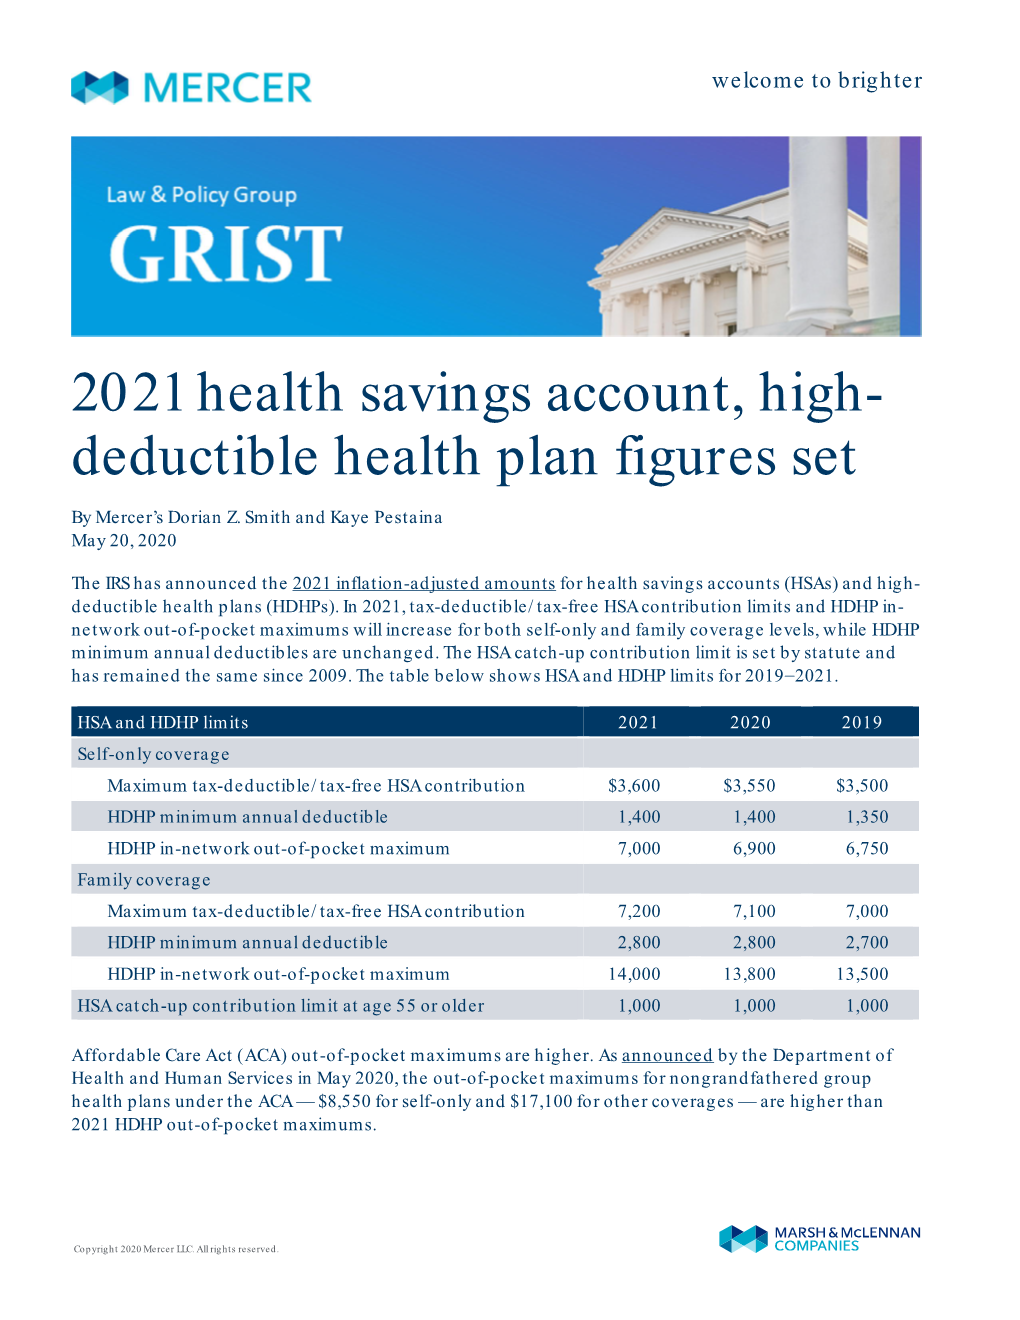 2021 Health Savings Account, High-Deductible Health Plan Figures Set